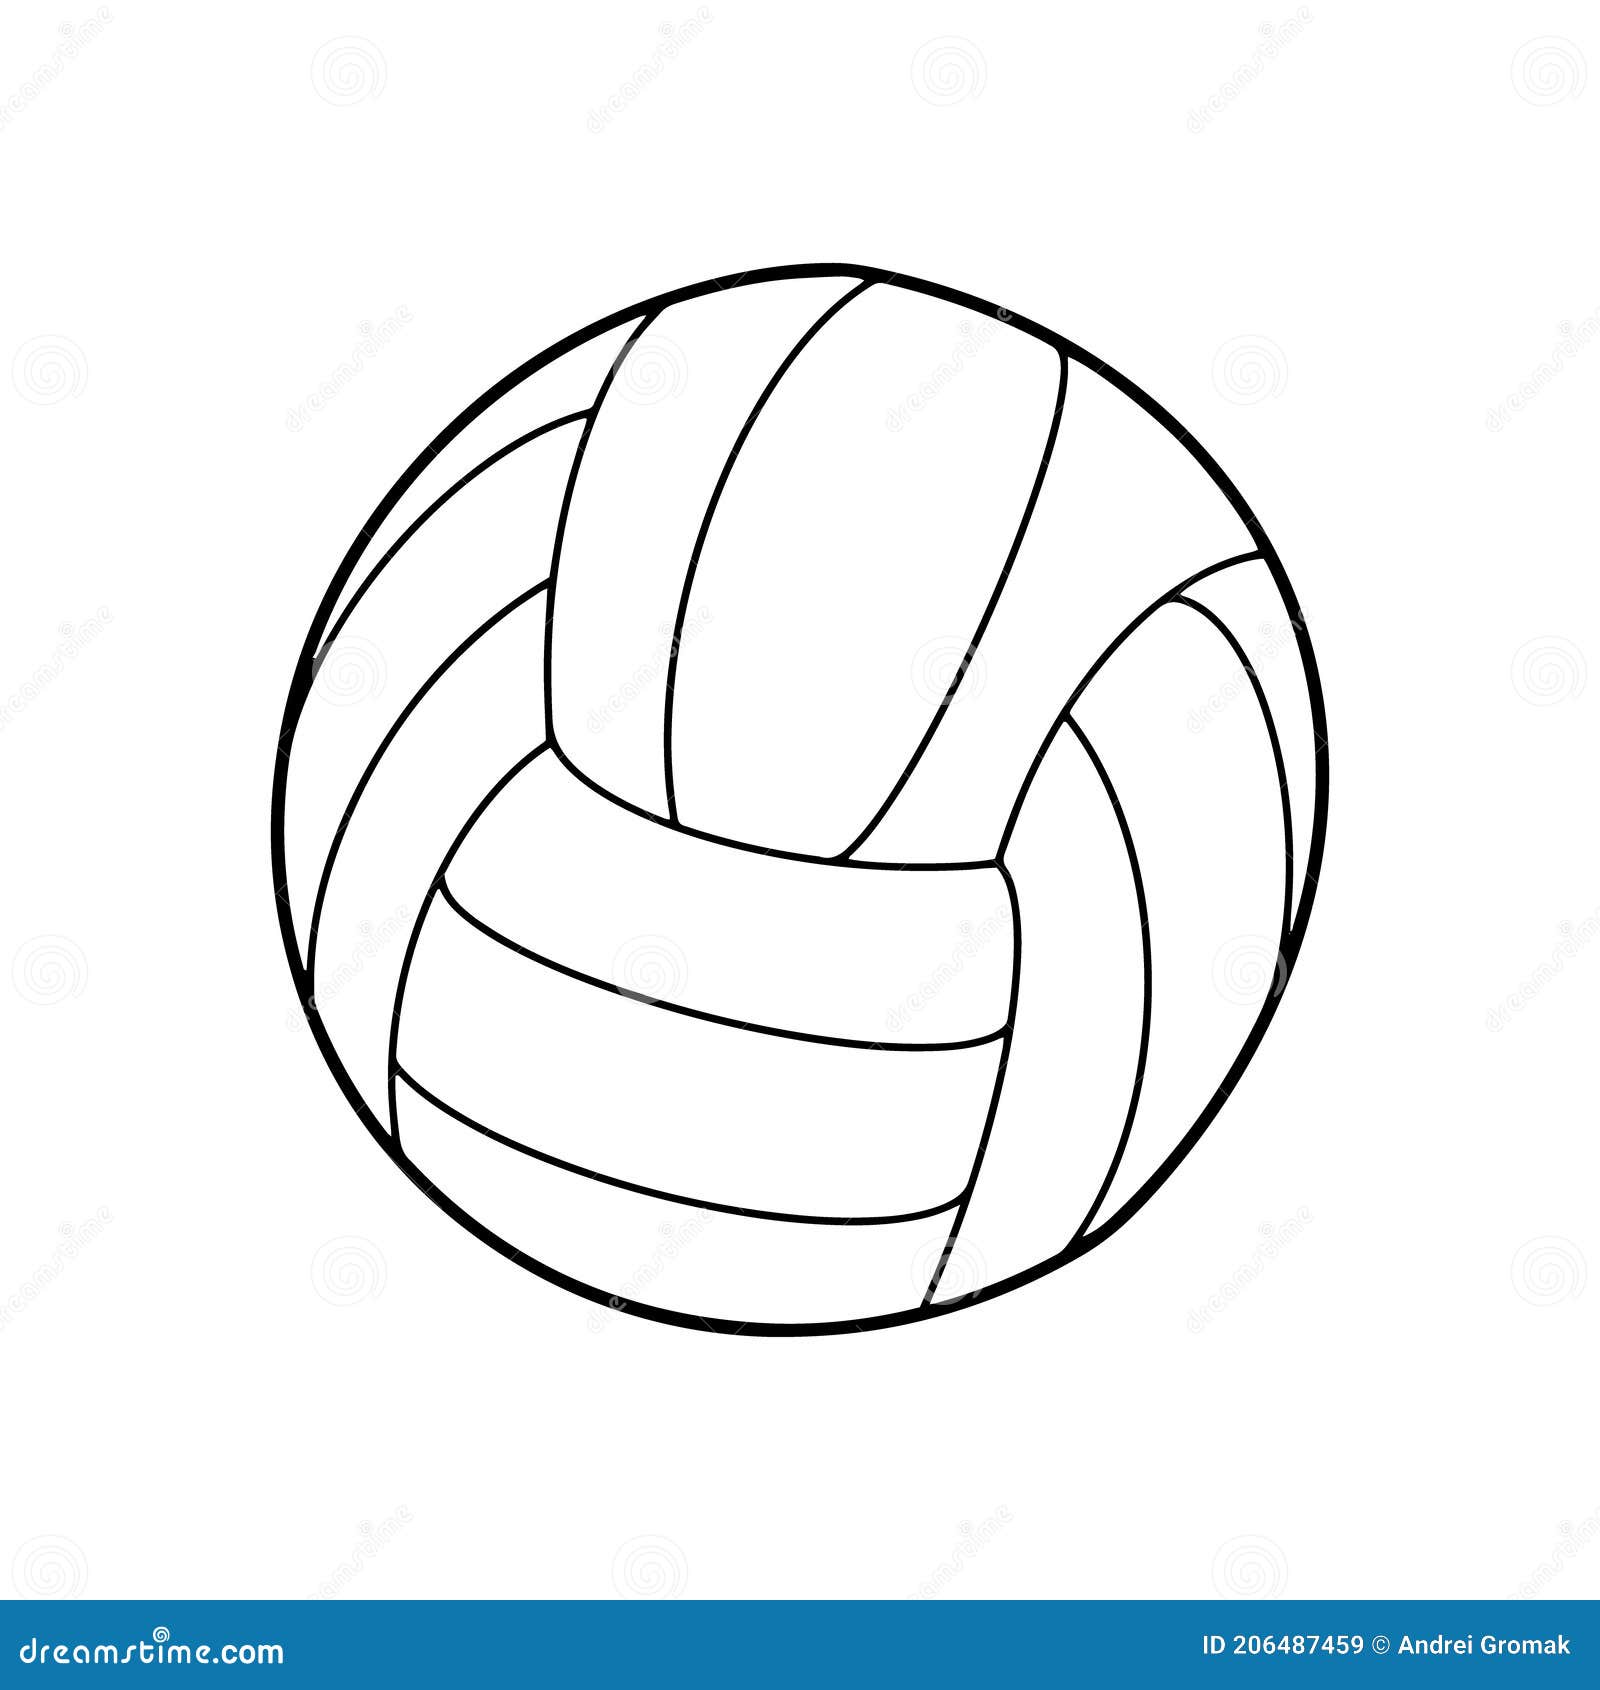 Volleyball ball stock vector. Illustration of equipment - 206487459